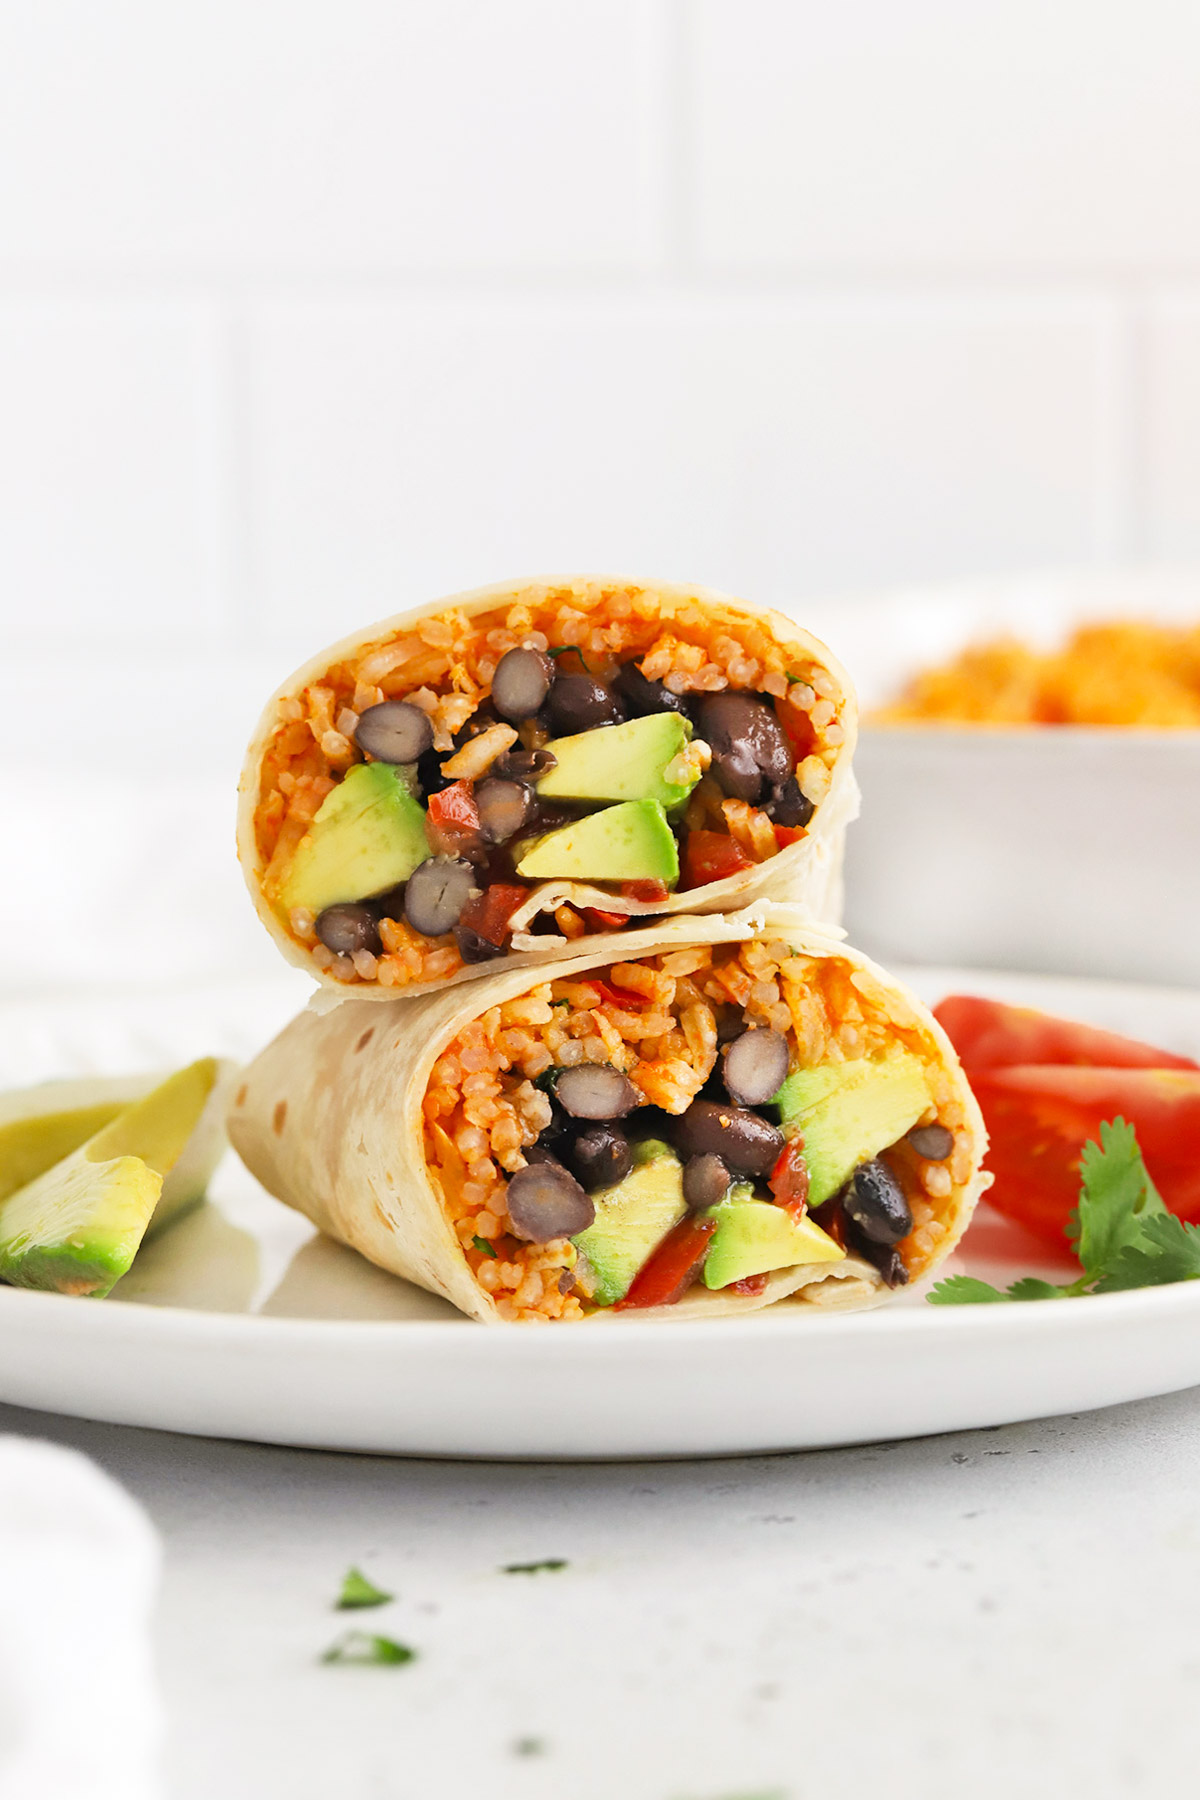 Front view of a vegan burrito with vegetarian Mexican Rice, black beans, avocado, and pico de gallo